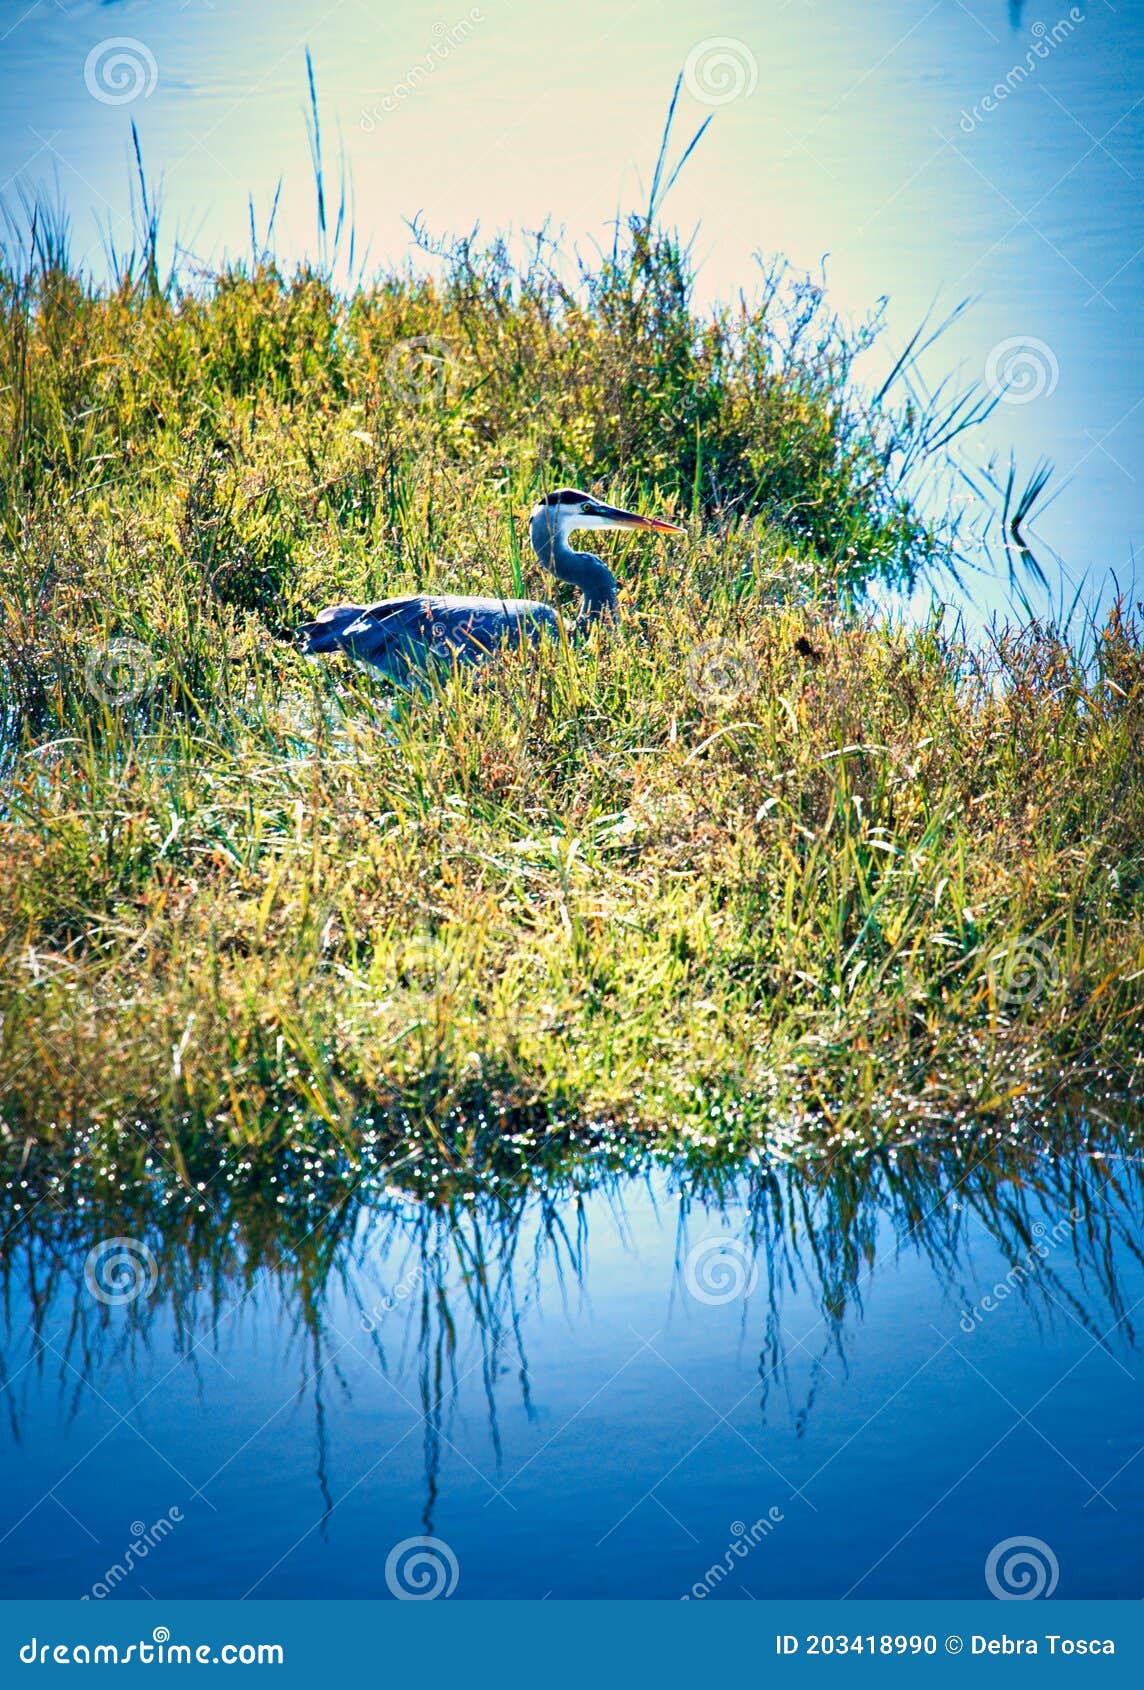 tall blue heron bird bolsa chica ecological reserve